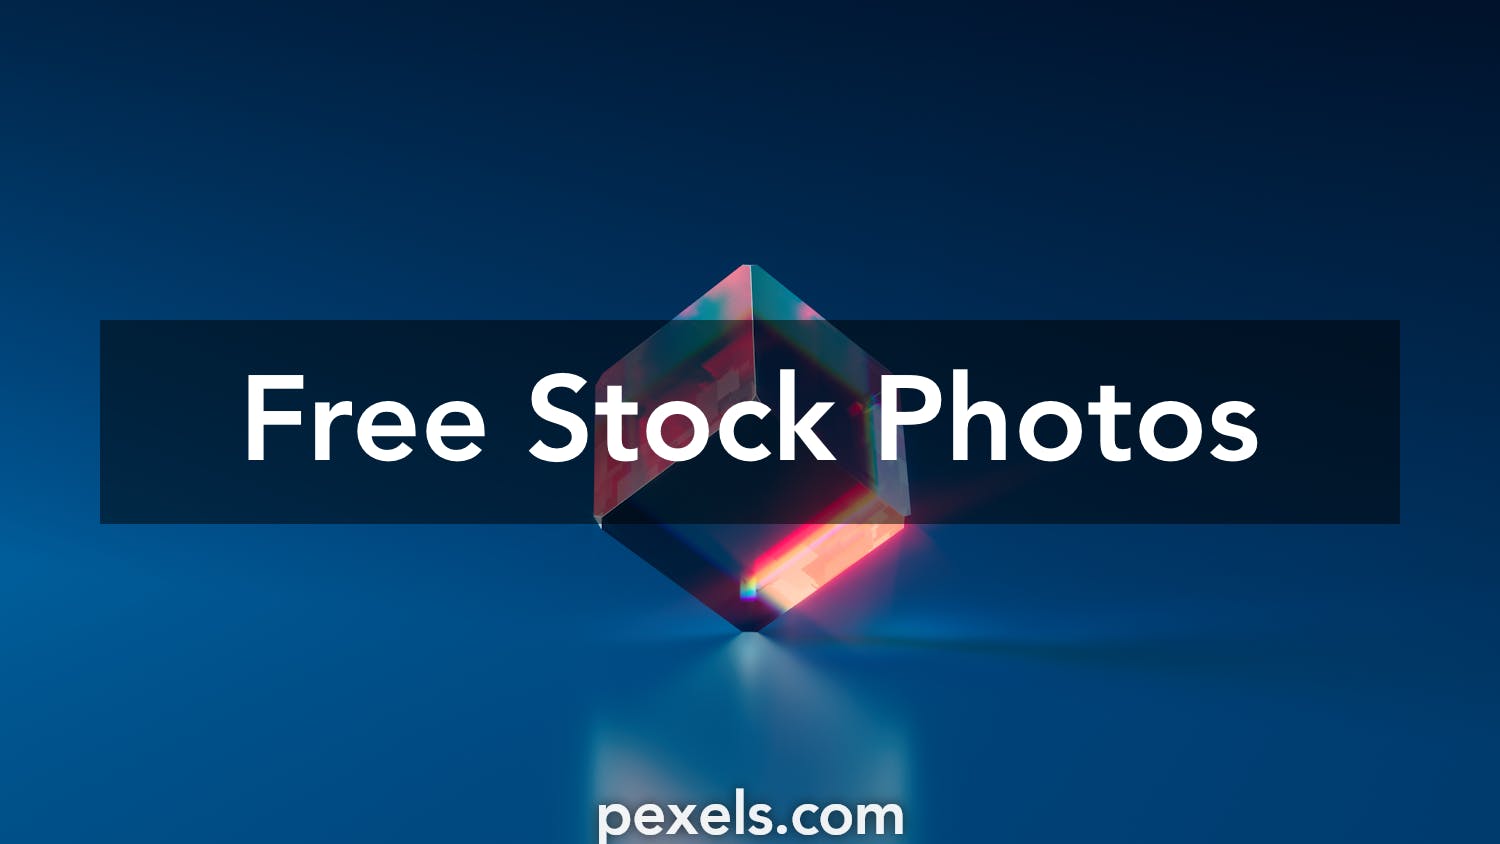 3D Wallpaper Photos, Download The Best Free 3D Wallpaper Stock Photos & Hd  Images